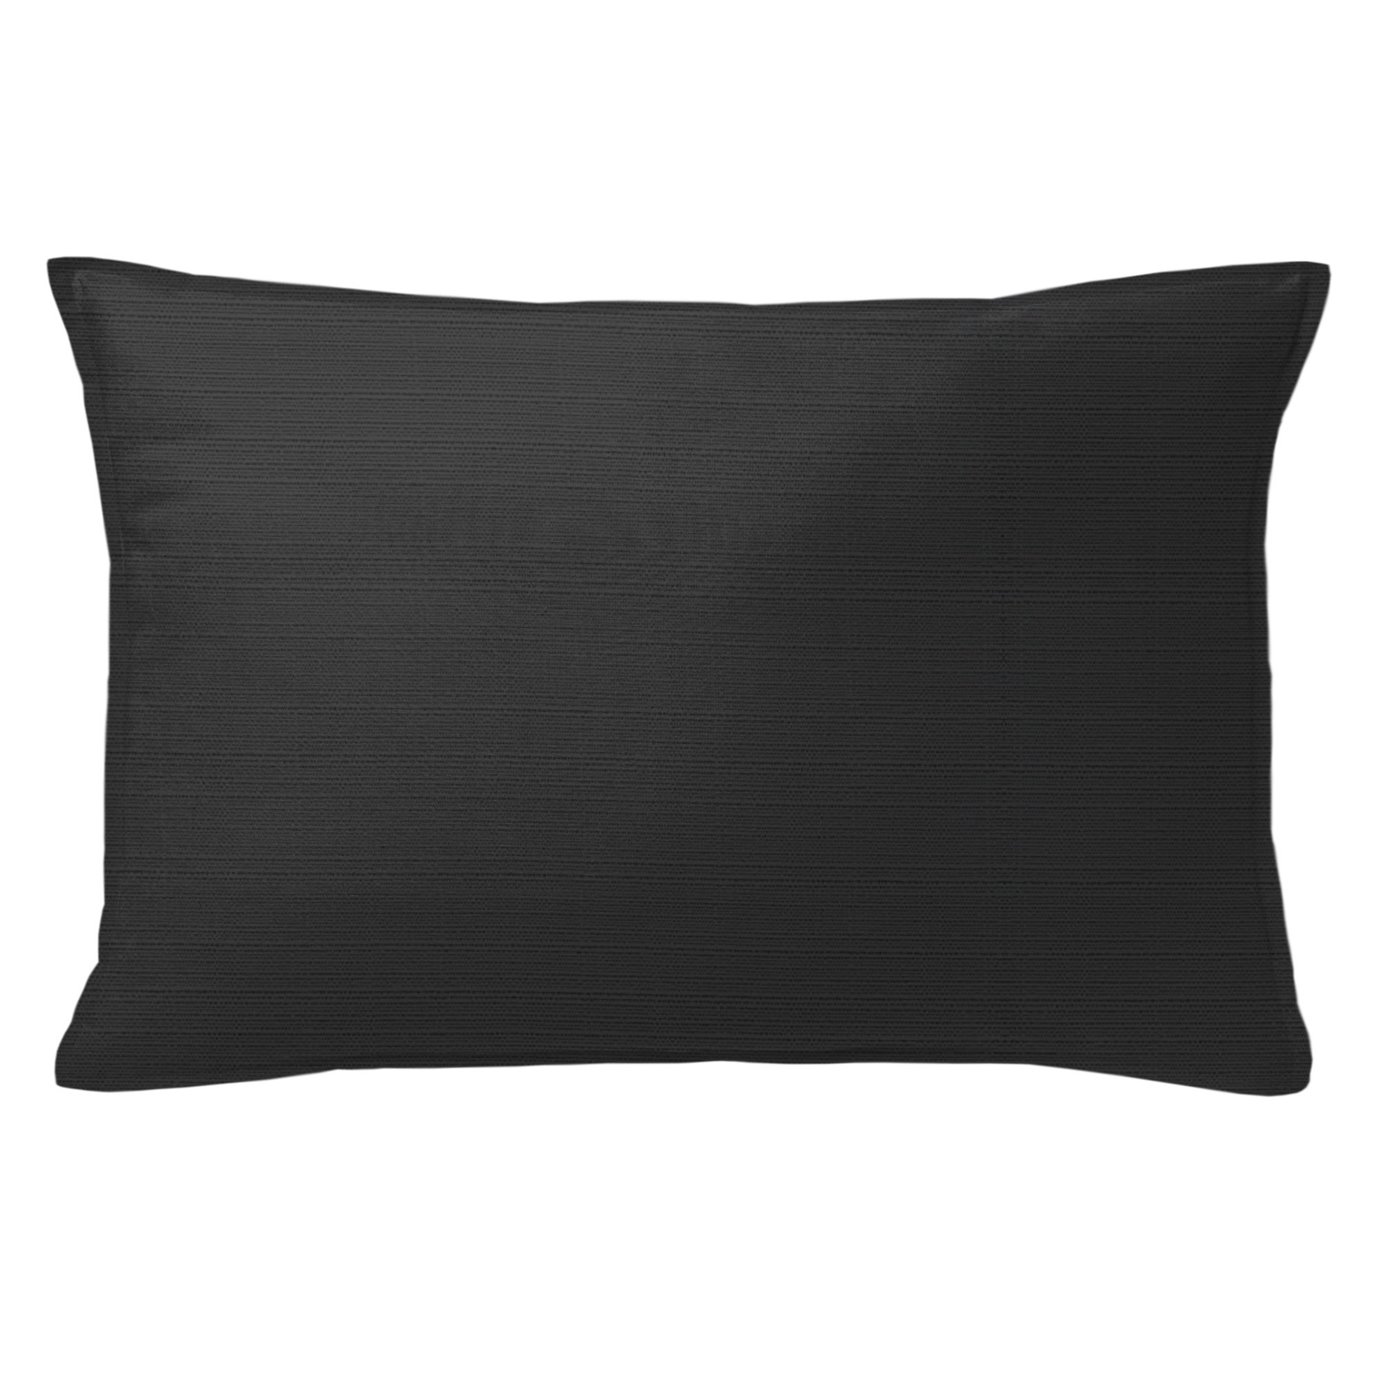 Nova Black Decorative Pillow - Size 14"x20" Rectangle